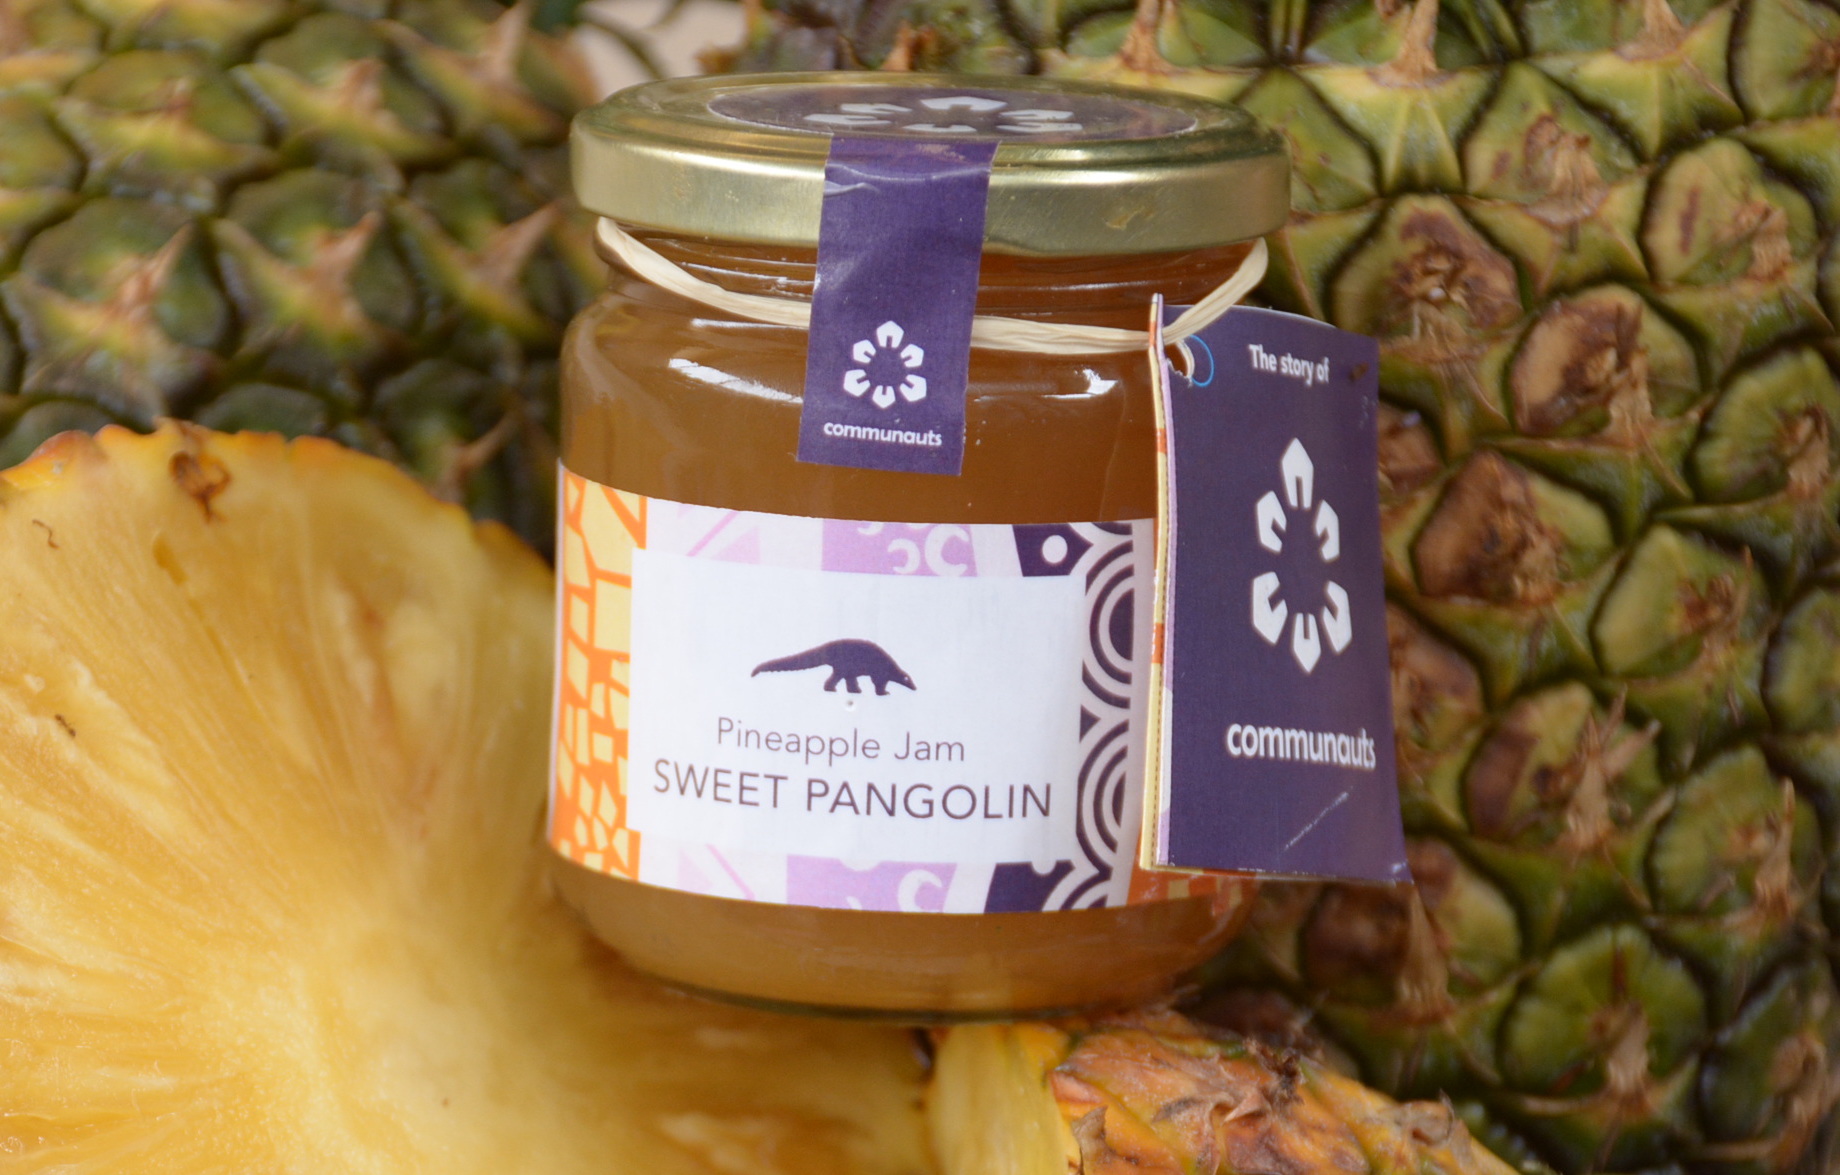 Sweet Pangolin Pineapple Jam